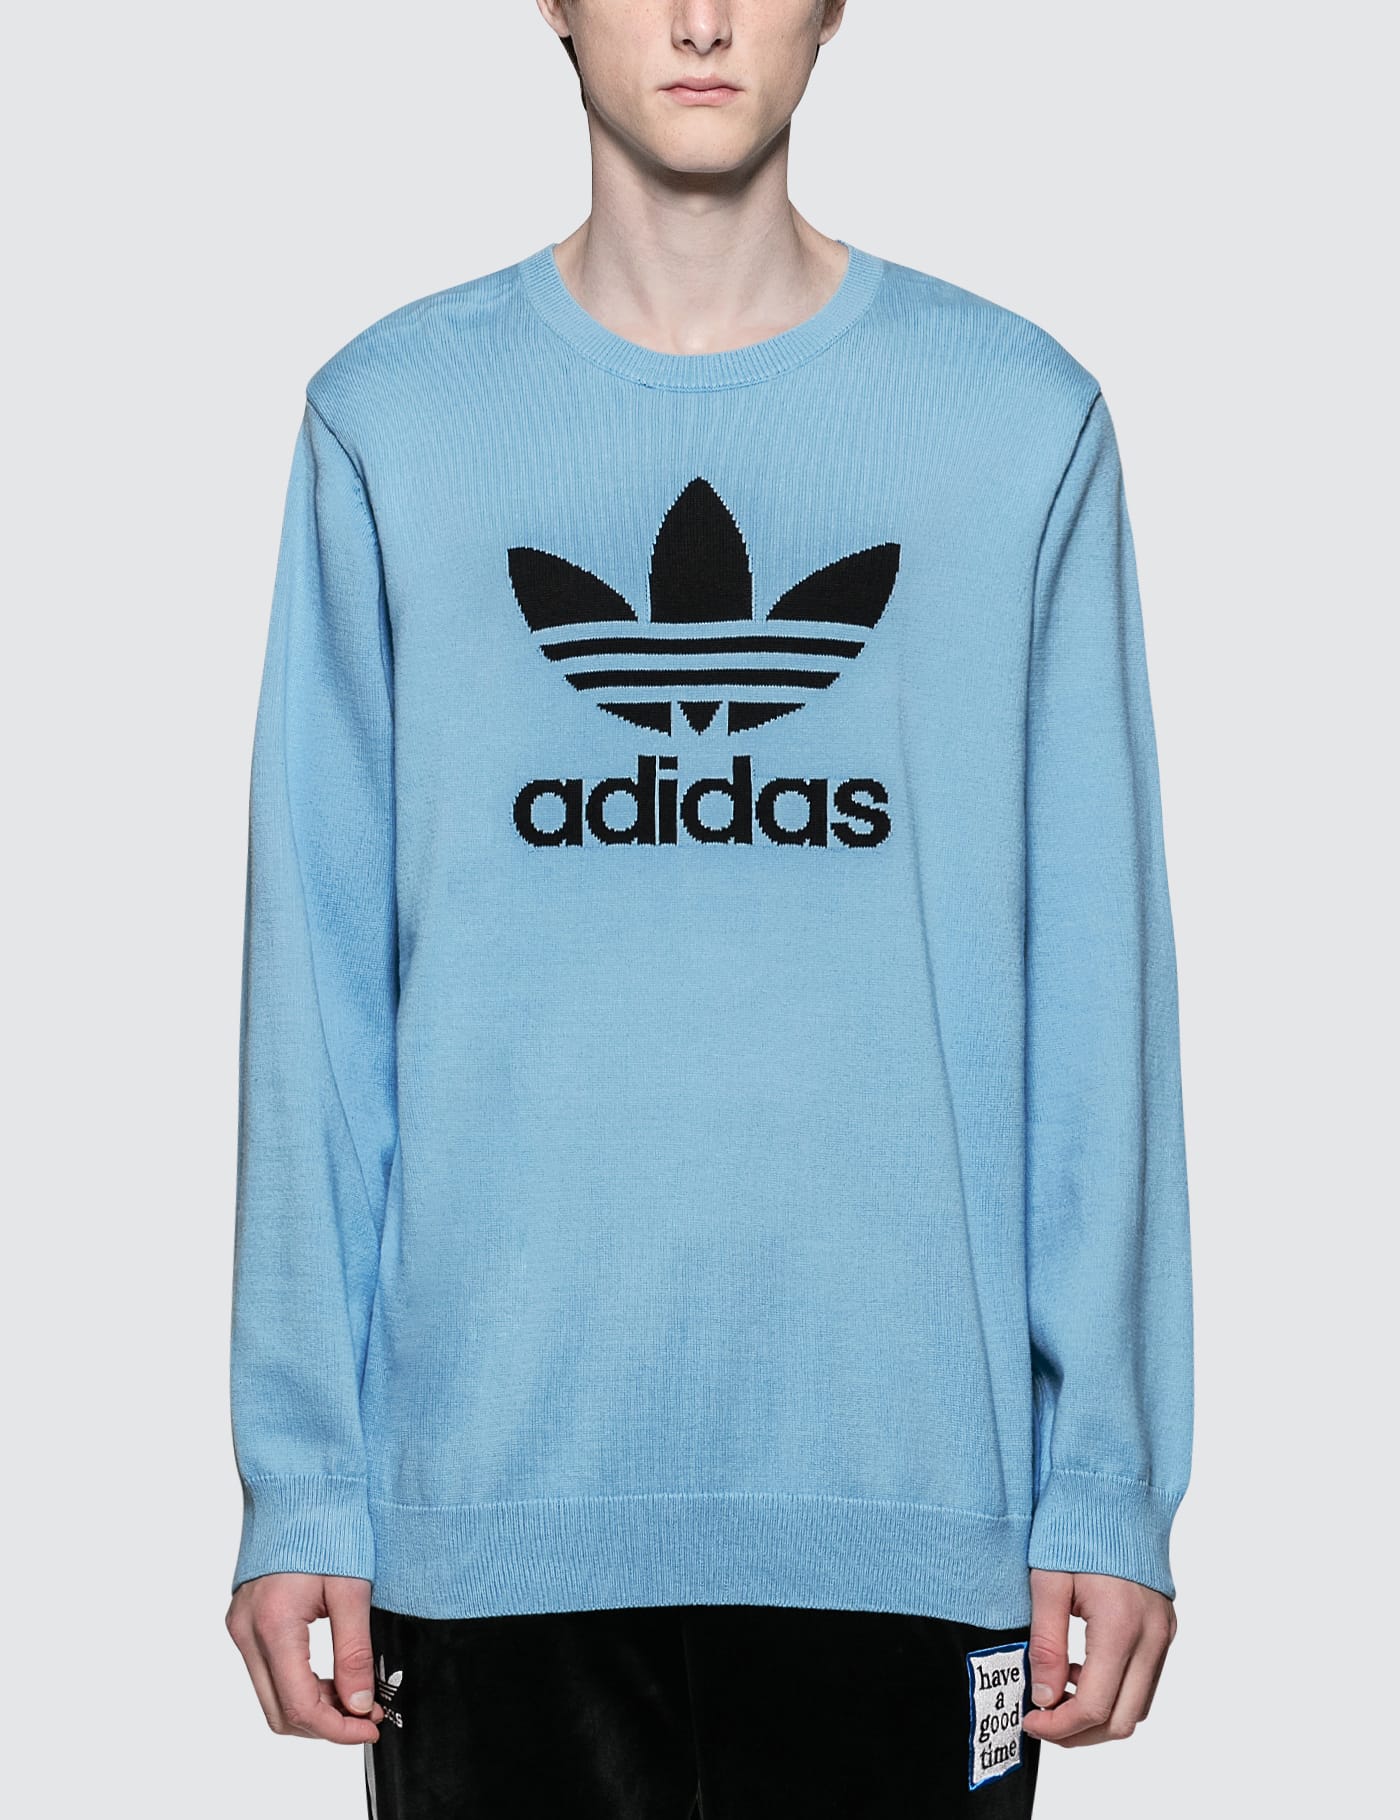 Adidas Originals - Have A Good Time x Adidas Summer Knit Sweater ...